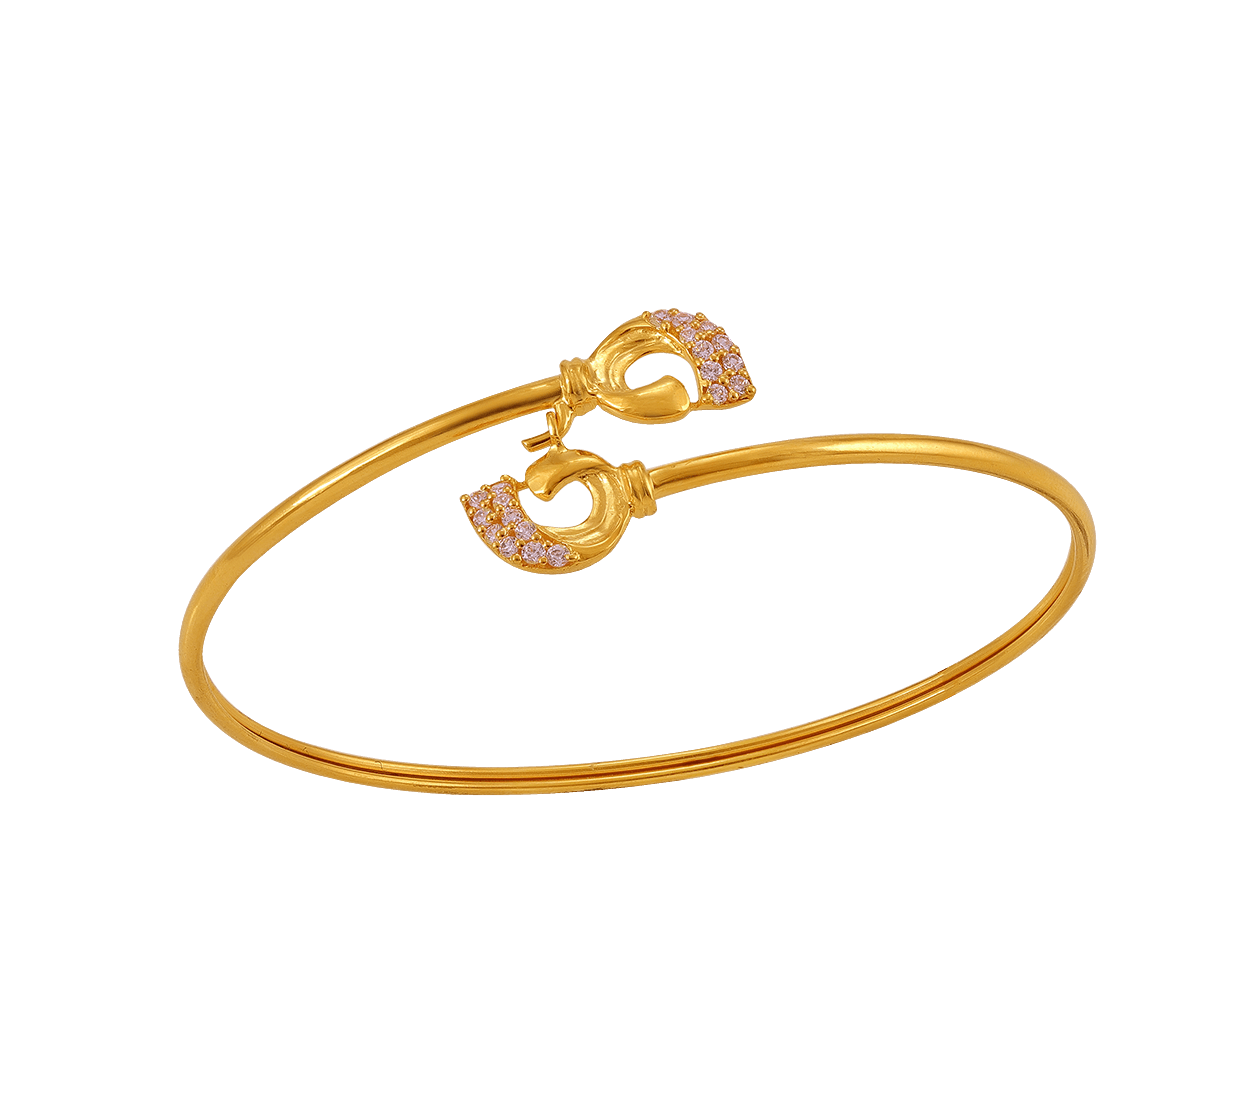 Mix Metal Free Size Adjustable Copper Kada - Bracelet Design-7